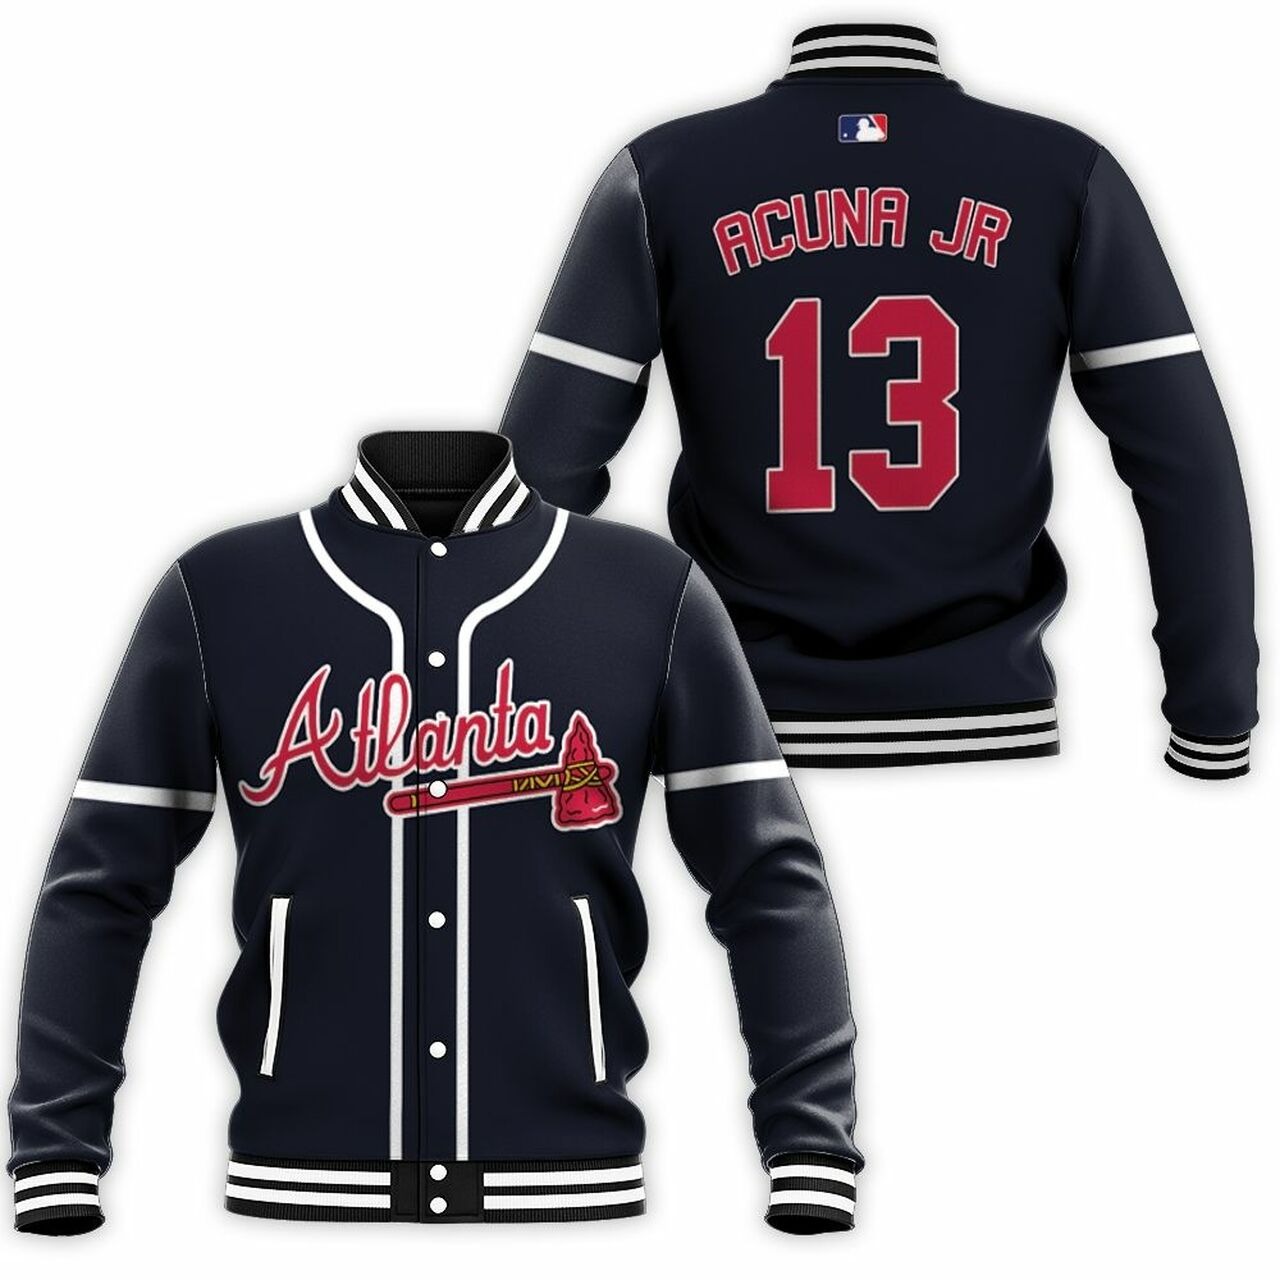 Atlanta Braves Ronald Acuna Jr 13 Mlb 2019 Navy Baseball Jacket